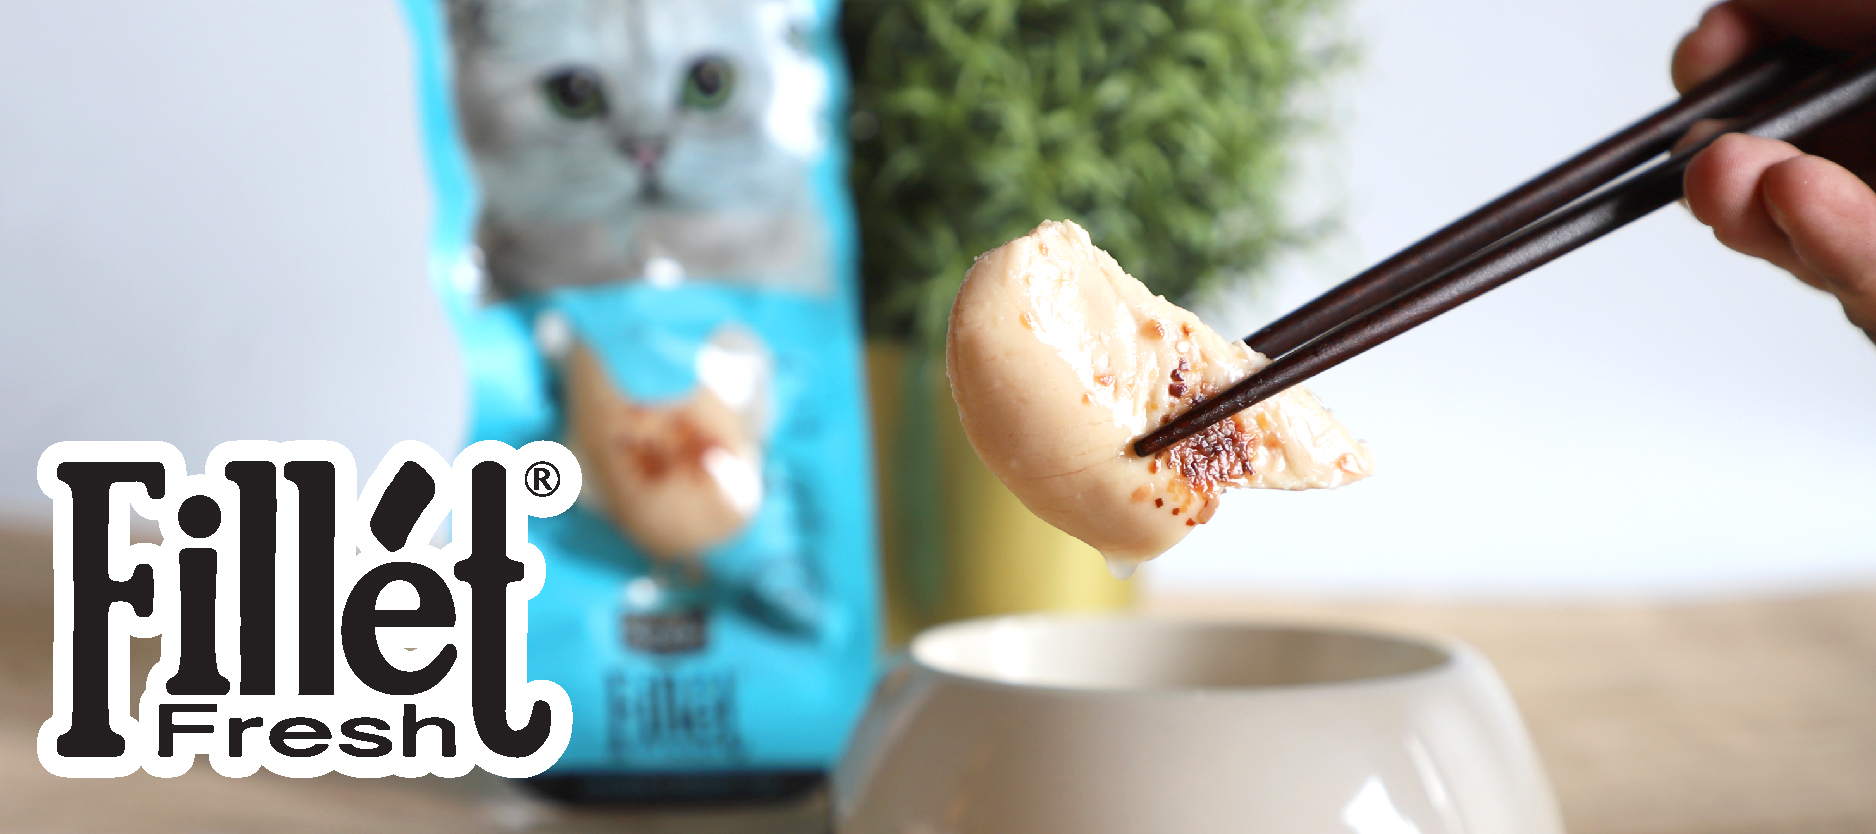 Kit Cat Fillet Fresh Tuna and Fiber (Hairball) - Kit Cat